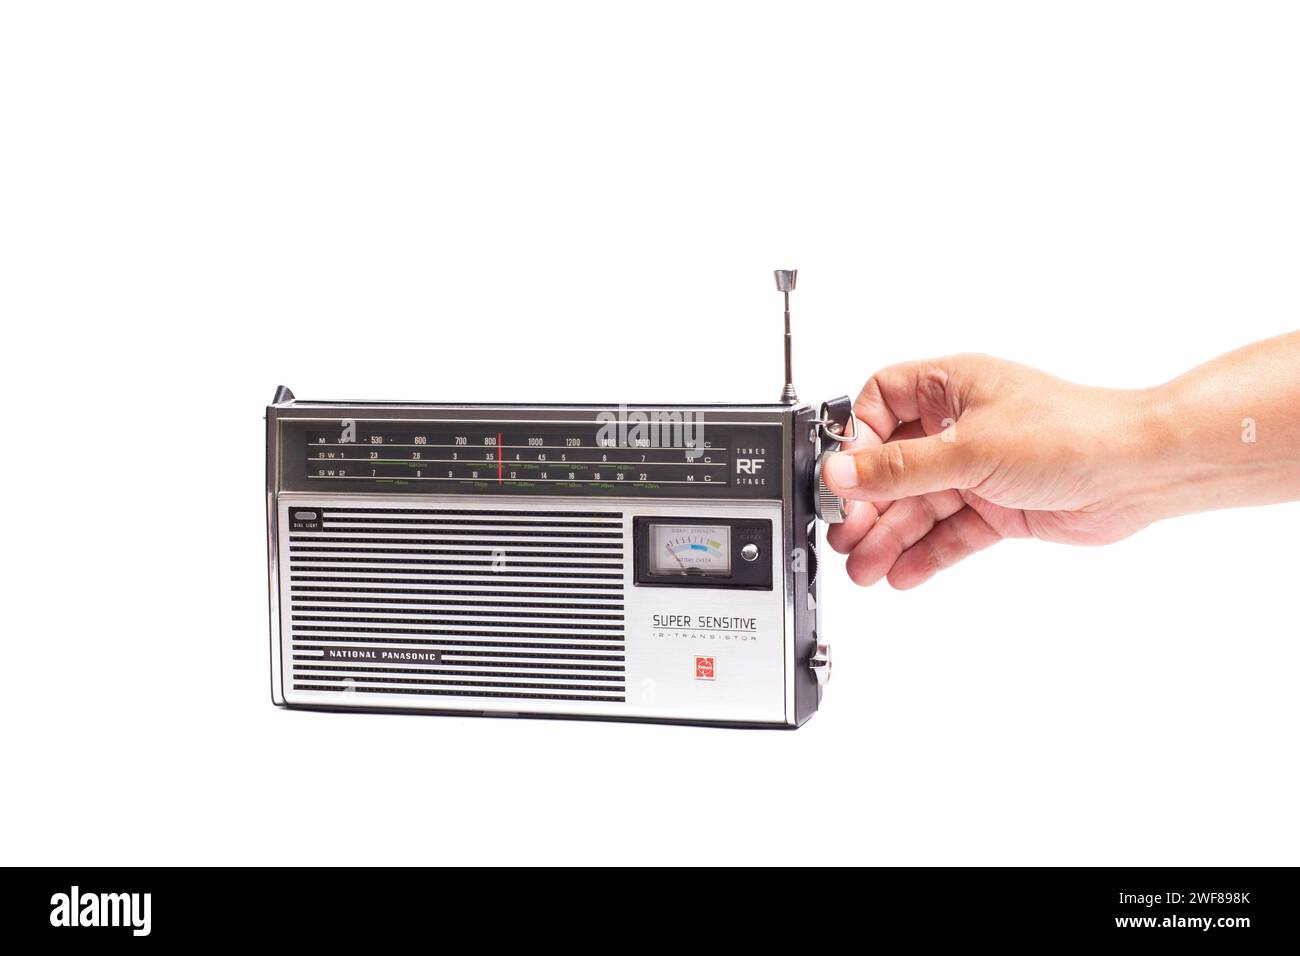 National Panasonic,super sensitive radio receiver with hand tuning radio receiver button Stock Photo